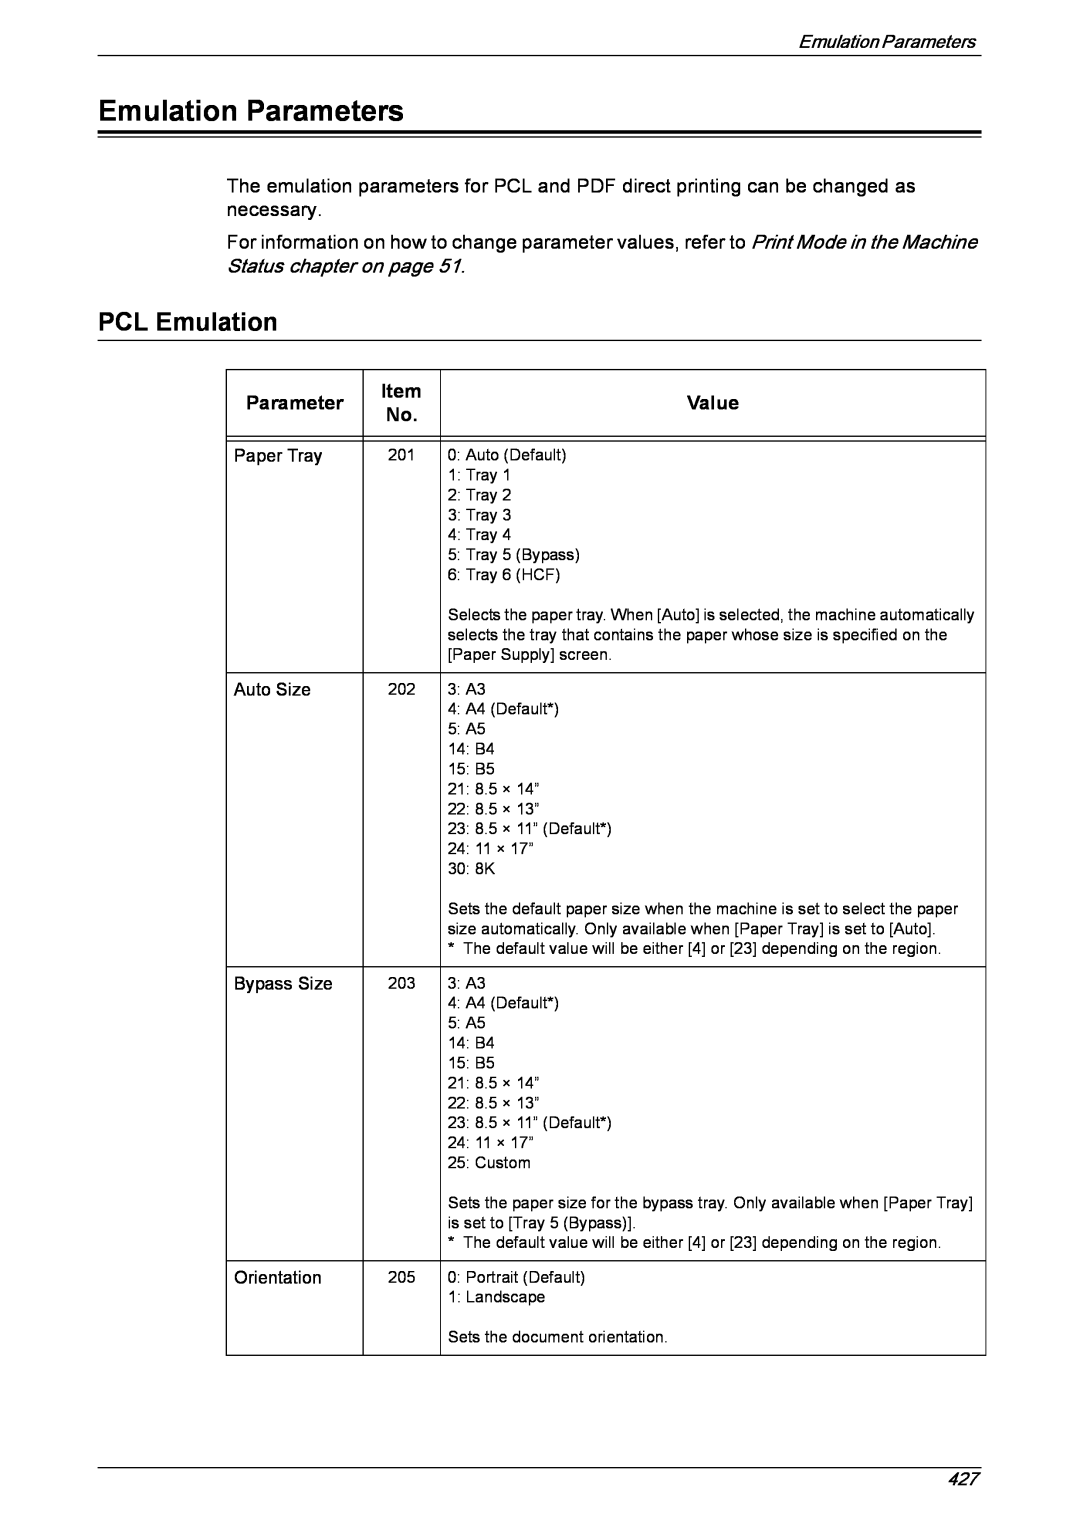 Xerox 5222 manual Emulation Parameters, PCL Emulation, Item, Value 